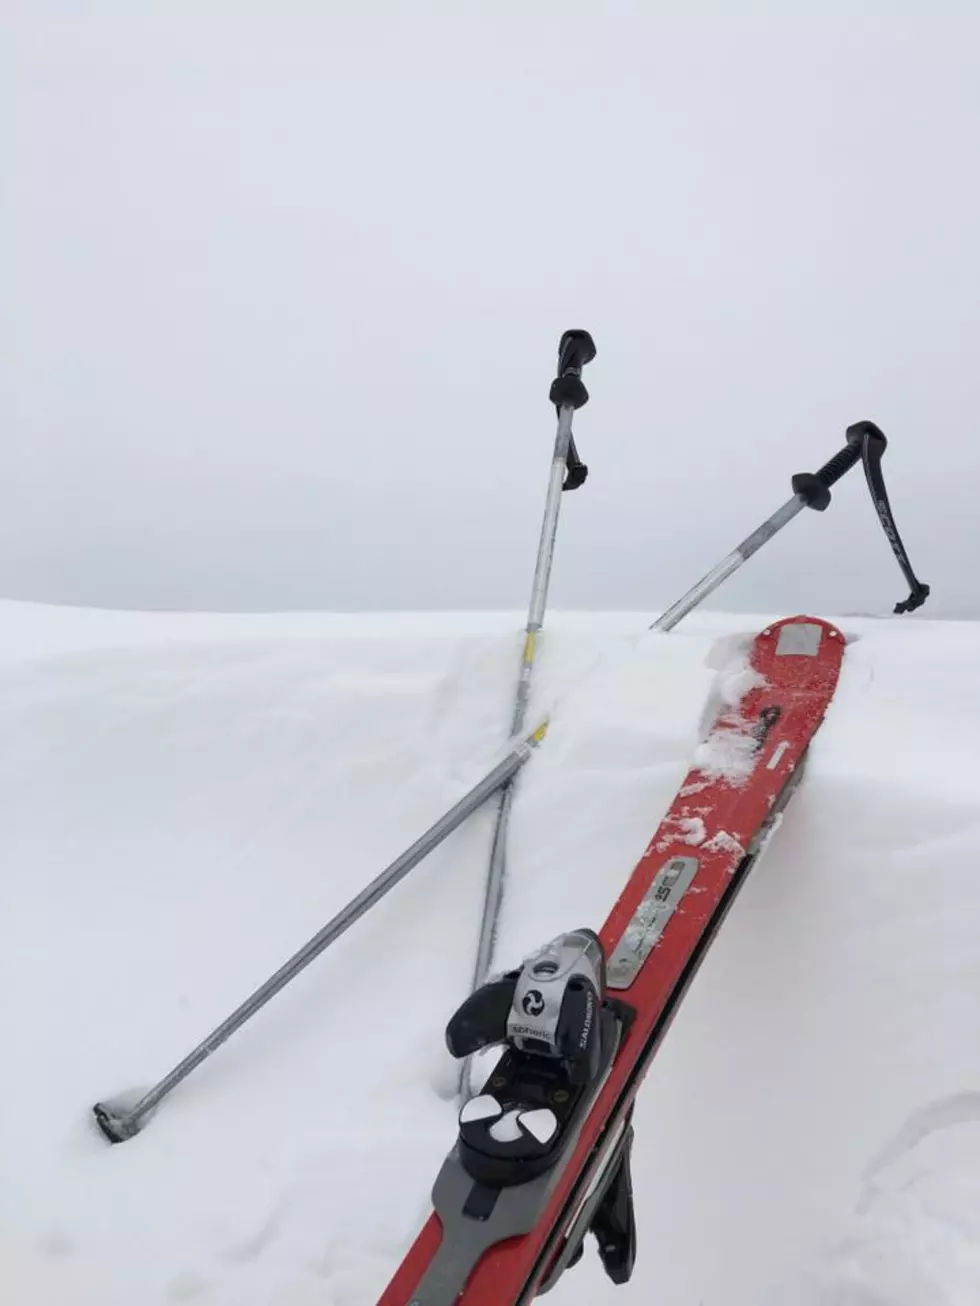 Watch Snow Lover John Winkle Ski Badger Mountain!